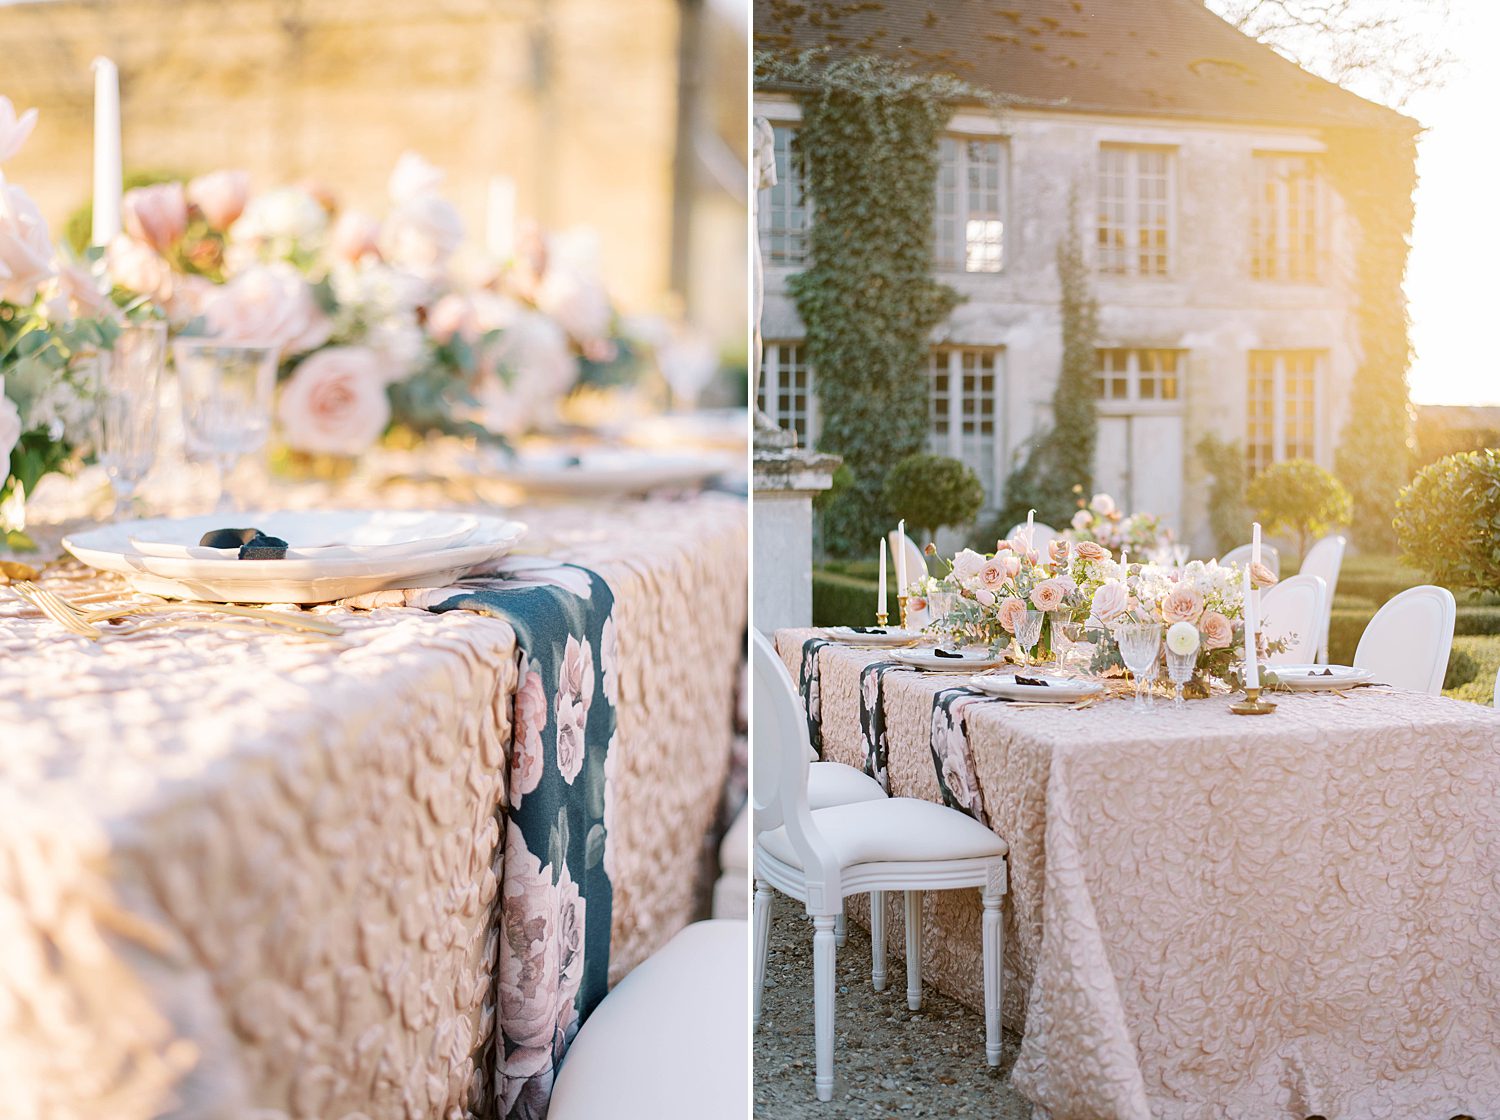 blush and gold wedding reception details for garden celebration at Chateau de Villette